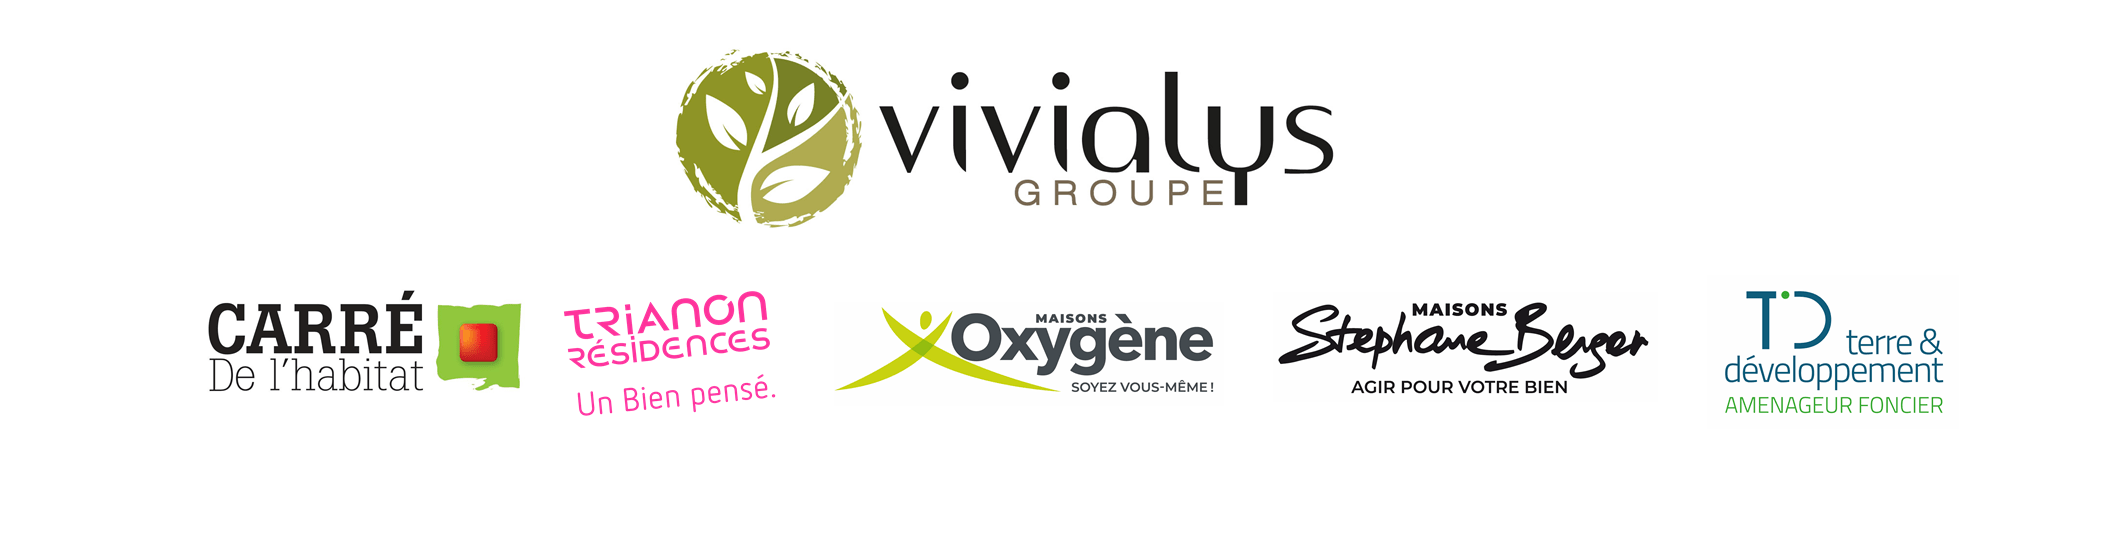 Groupe-Vivialys-marques